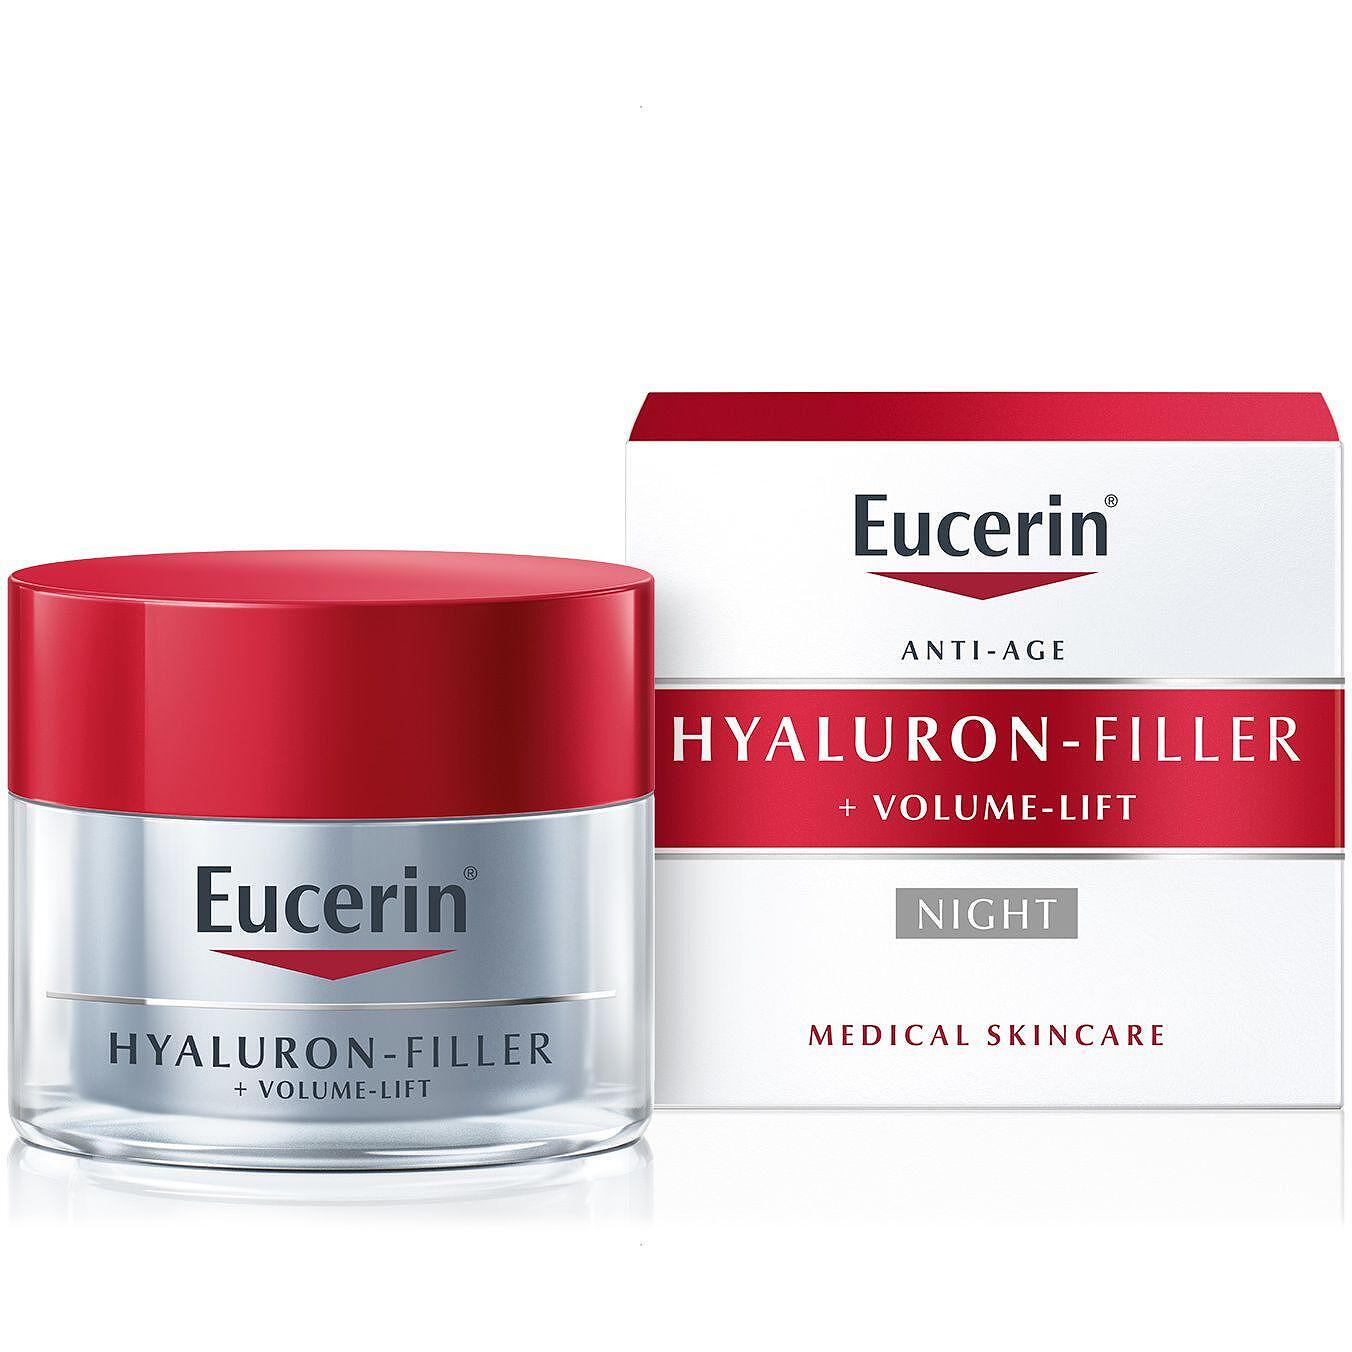 Eucerin Hyaluron-Filler + Volume Lift нощен крем, 50 мл | Еусерин